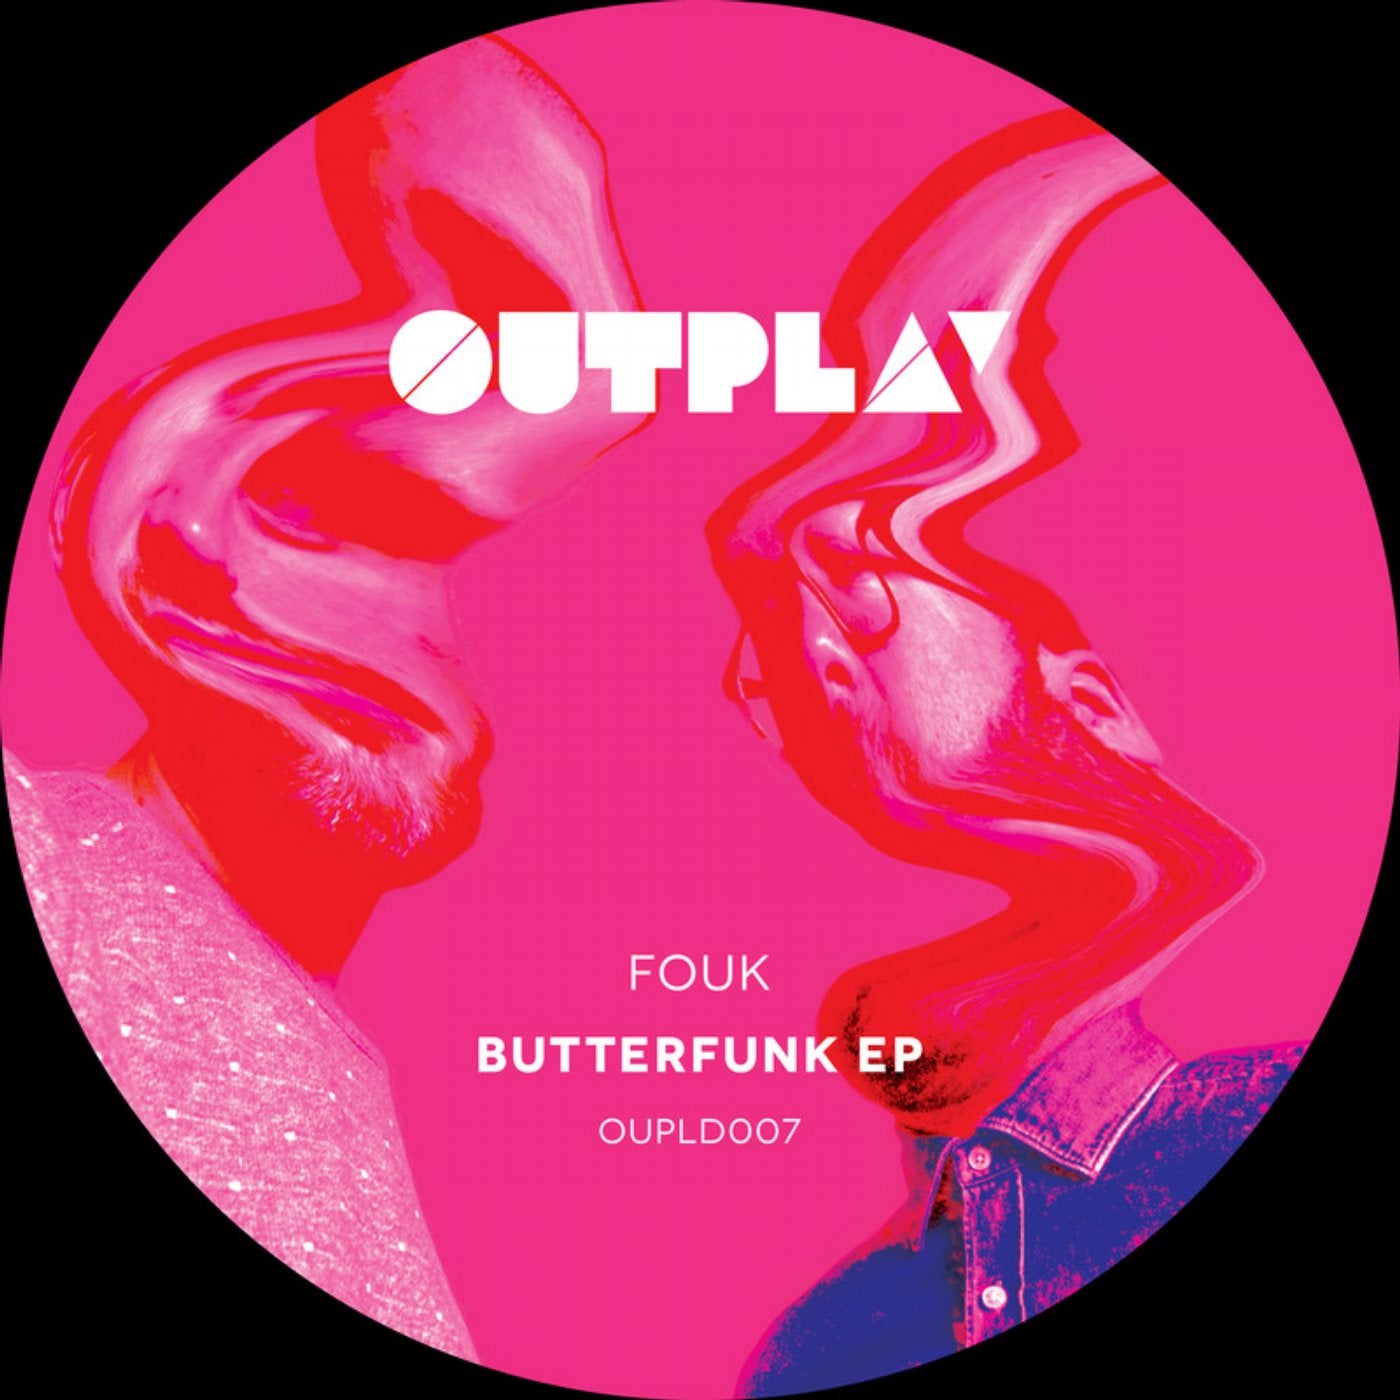 Butterfunk EP